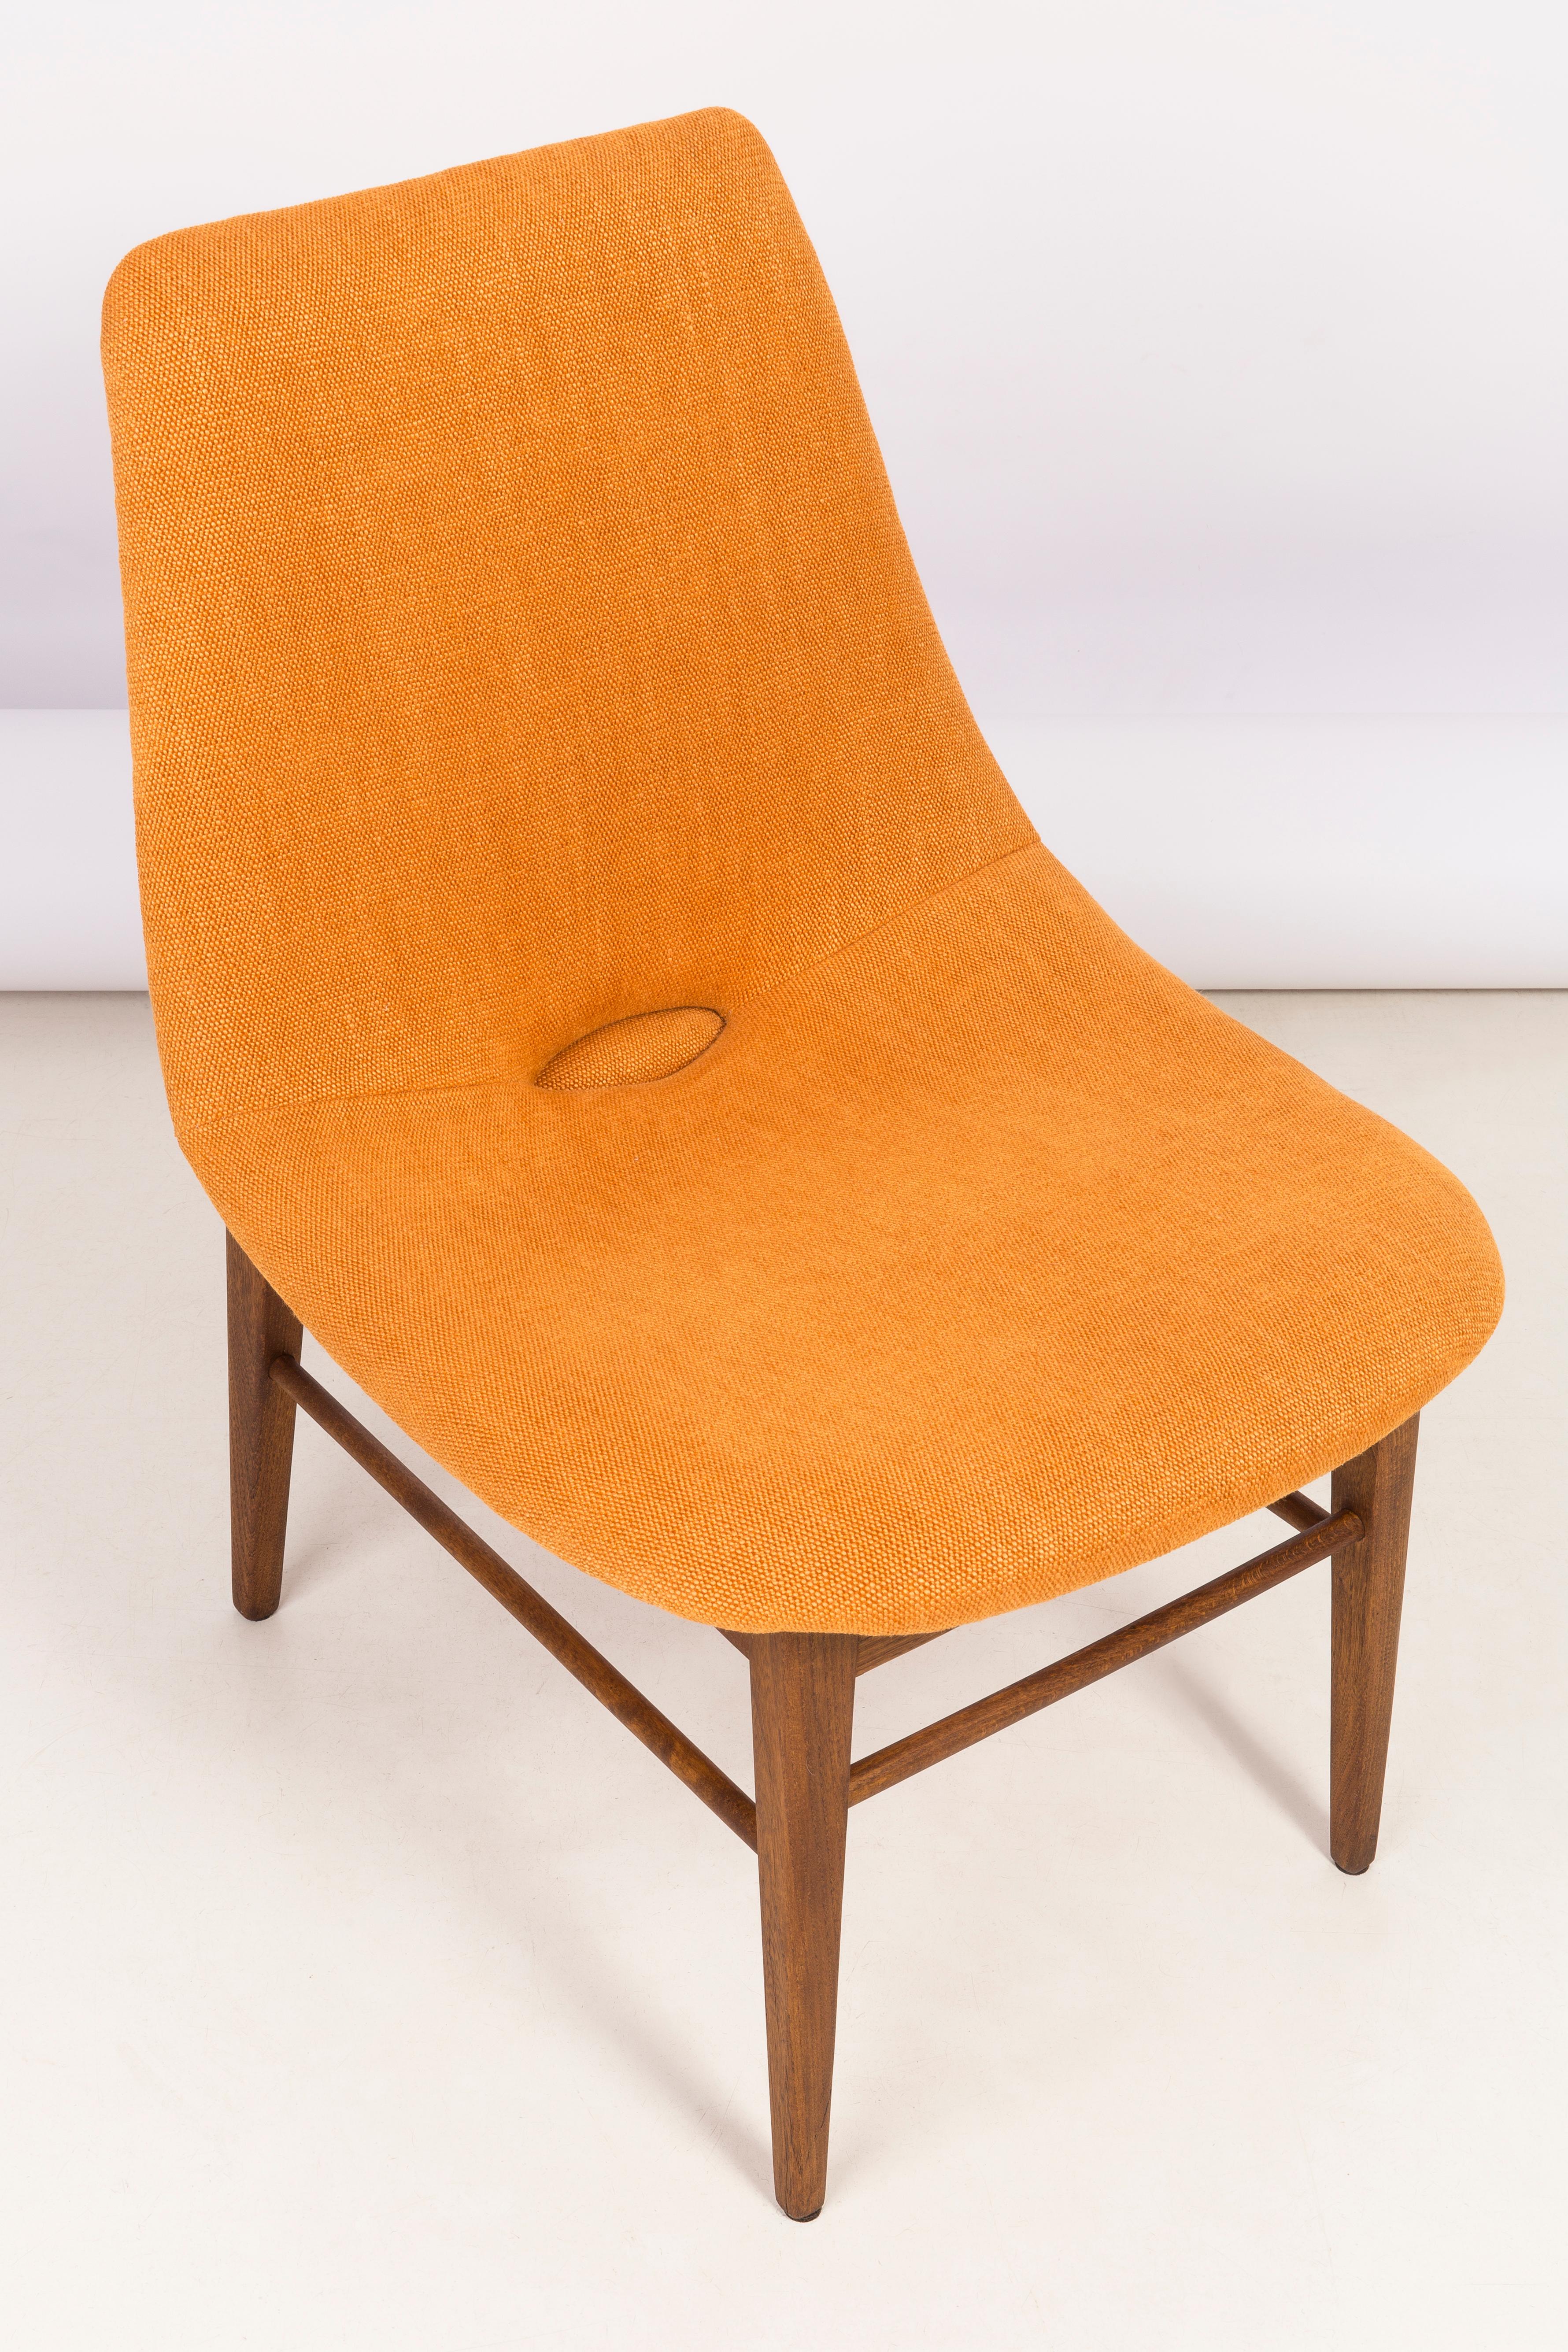 Rare 20th Century Orange Shell Chair, H.Lachert, 1960s For Sale 8